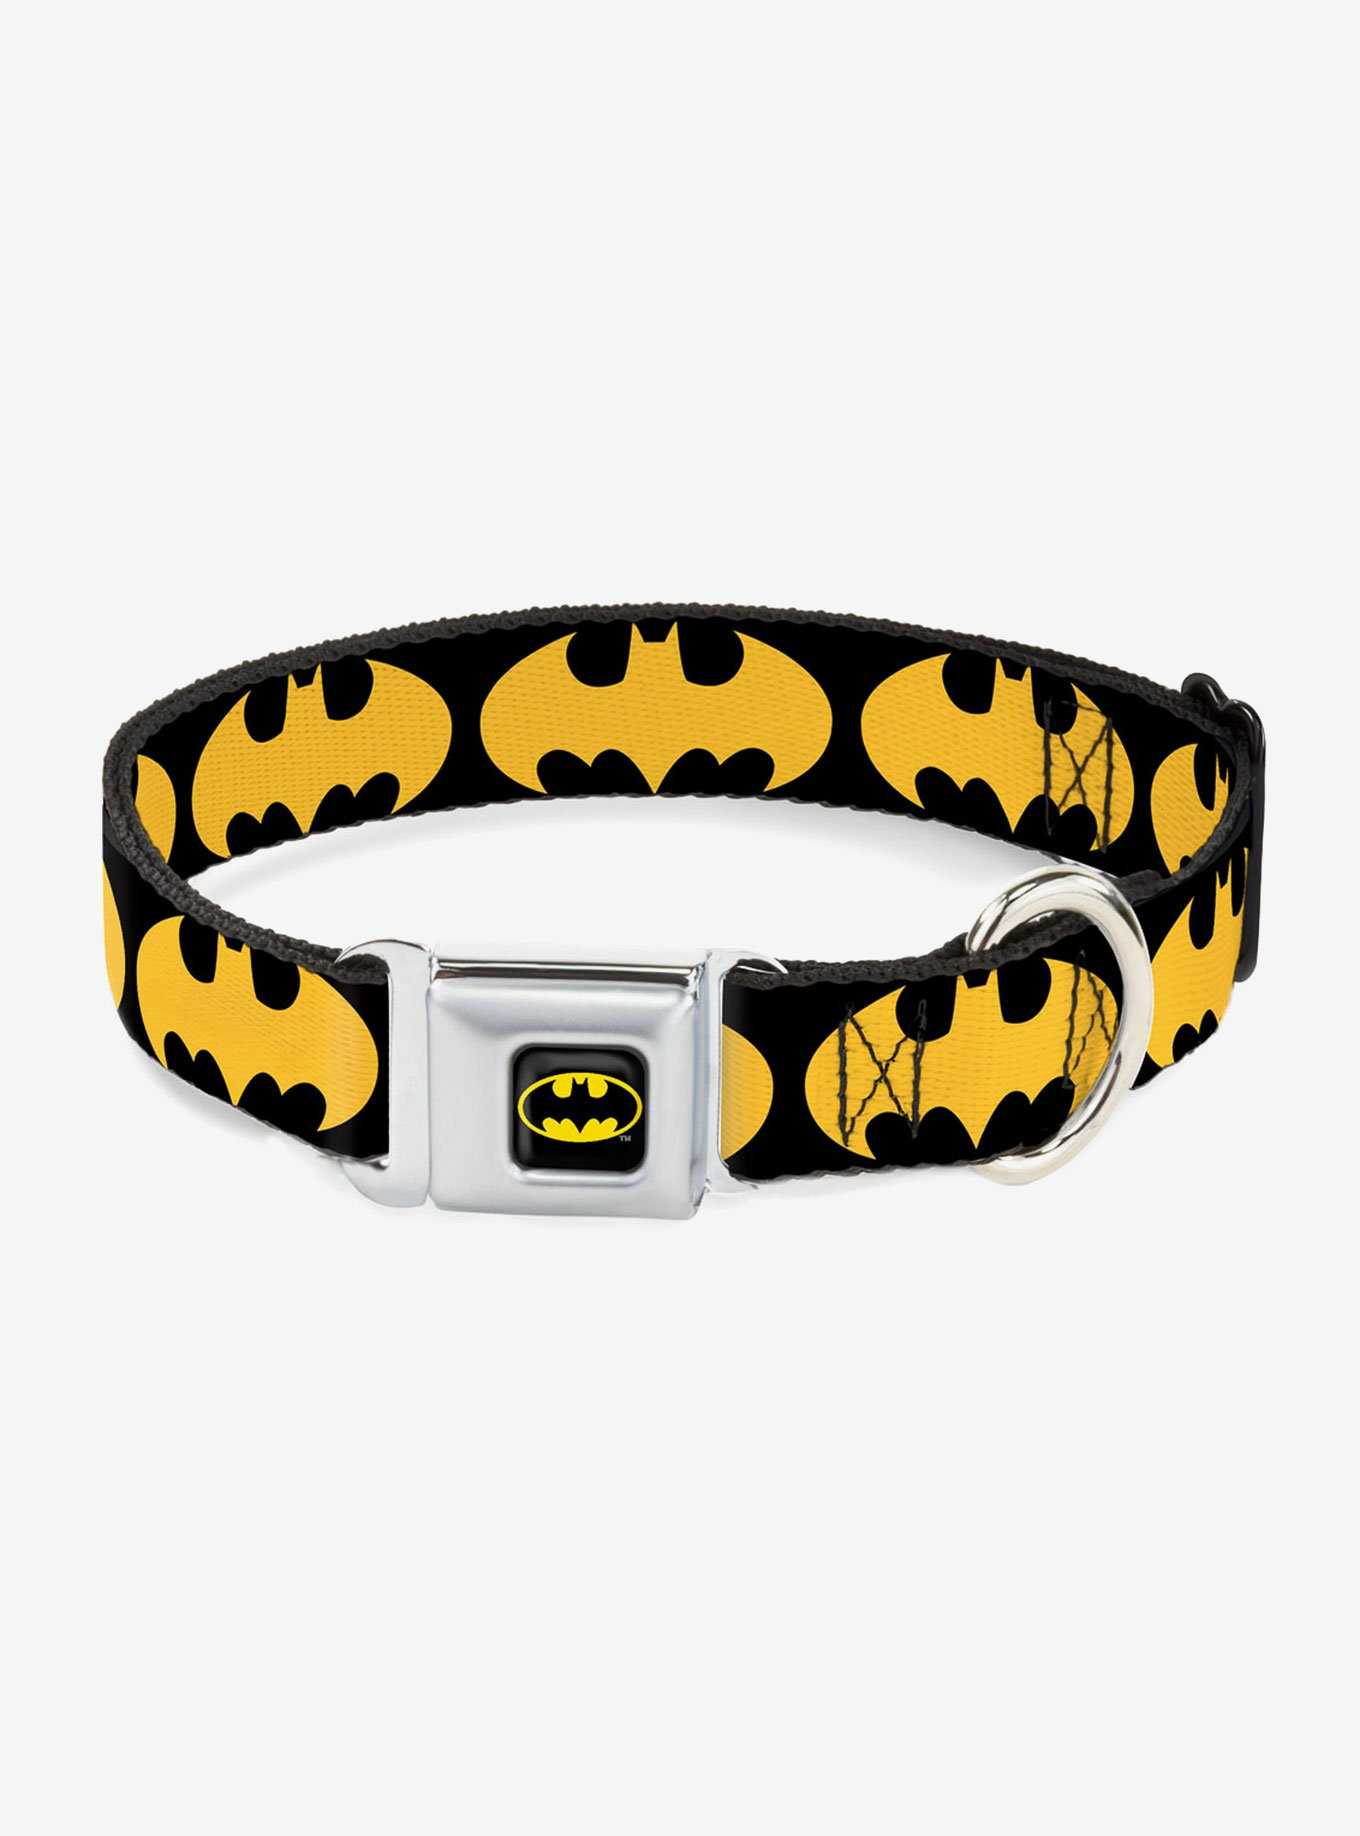 DC Comics Justice League Bat Signal 1 Black Yellow Seatbelt Buckle Pet Collar, , hi-res